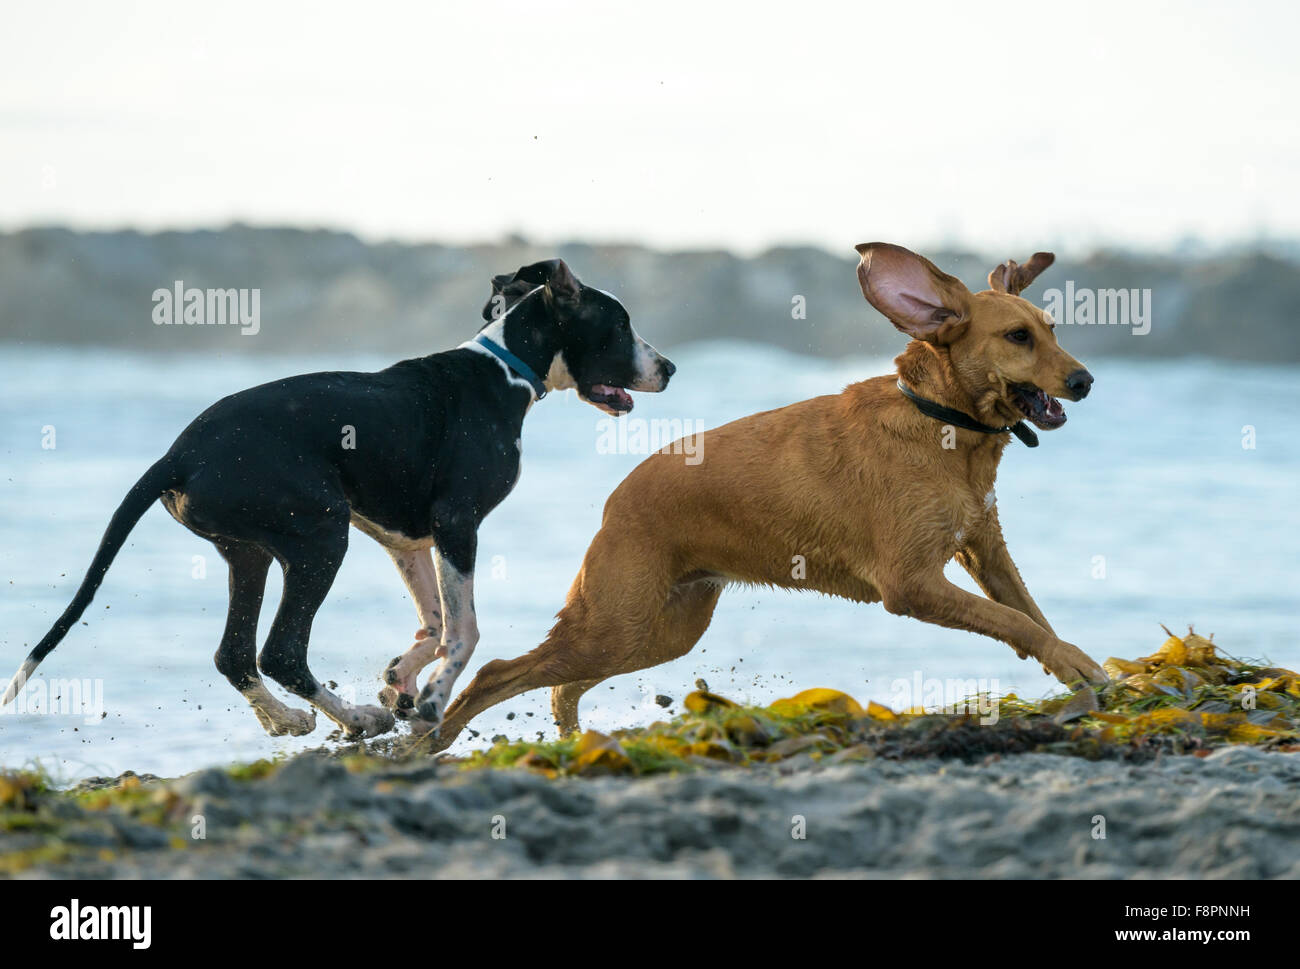 Dogs play, run and splash on Ocean Beach, CA shoreline Stock Photo